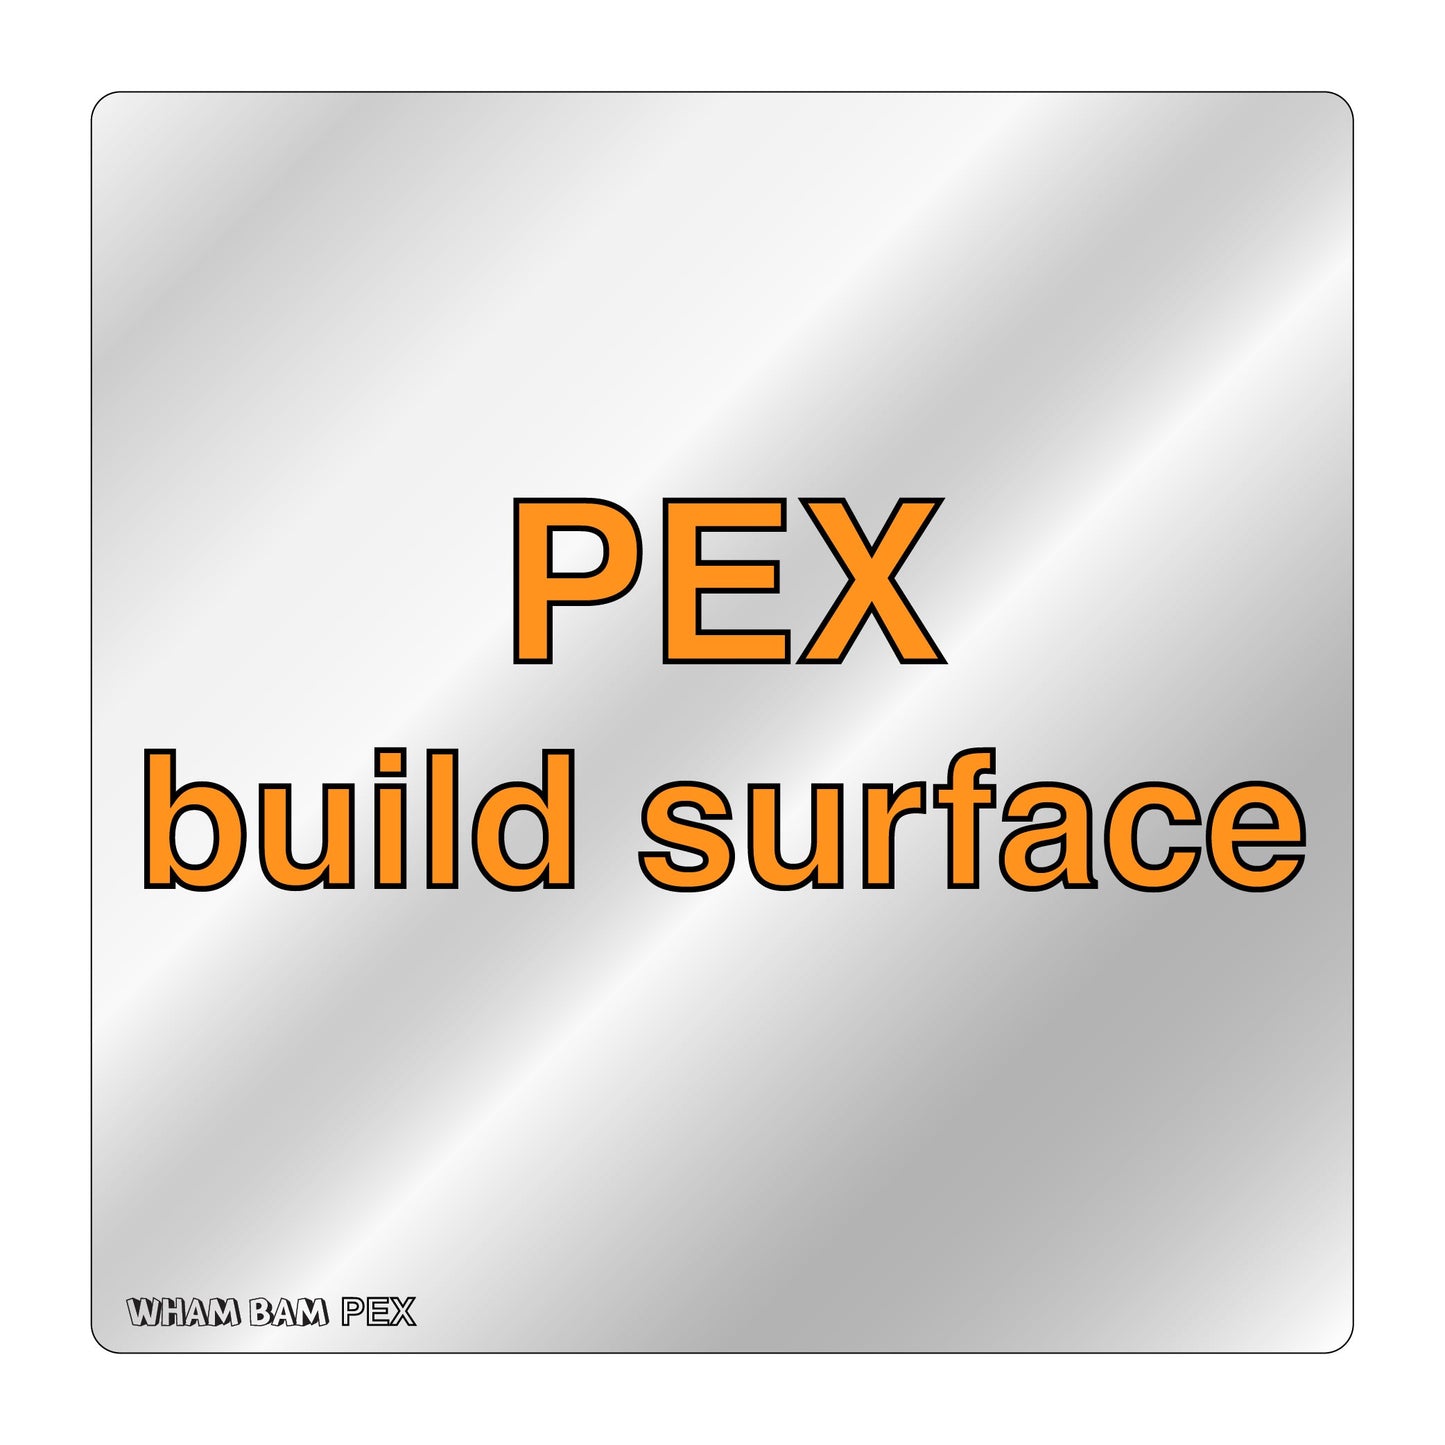 PEX Build Surface - 250 x 250 - Anker Make M5